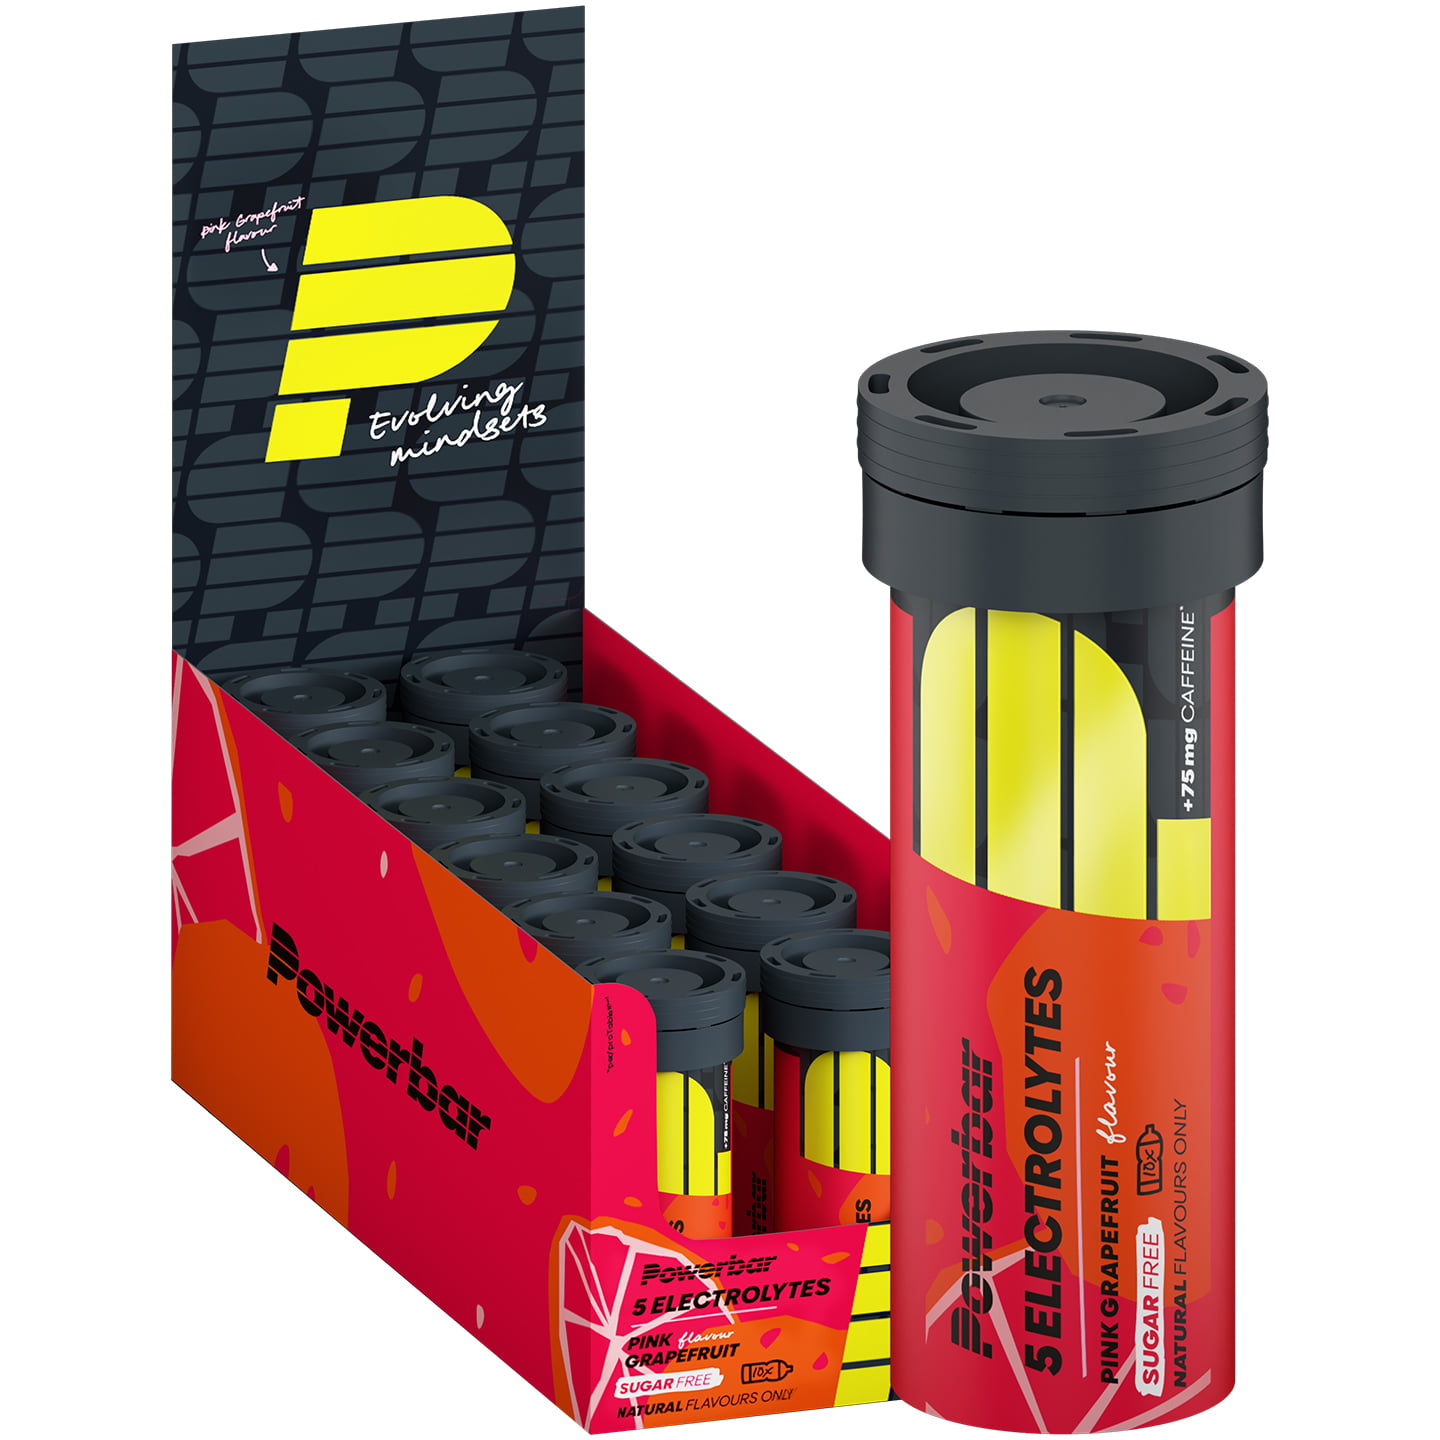 POWERBAR Effervescent Tabs 5Electrolytes Pink Grapefruit + Caffeine, Power drink, Sports food